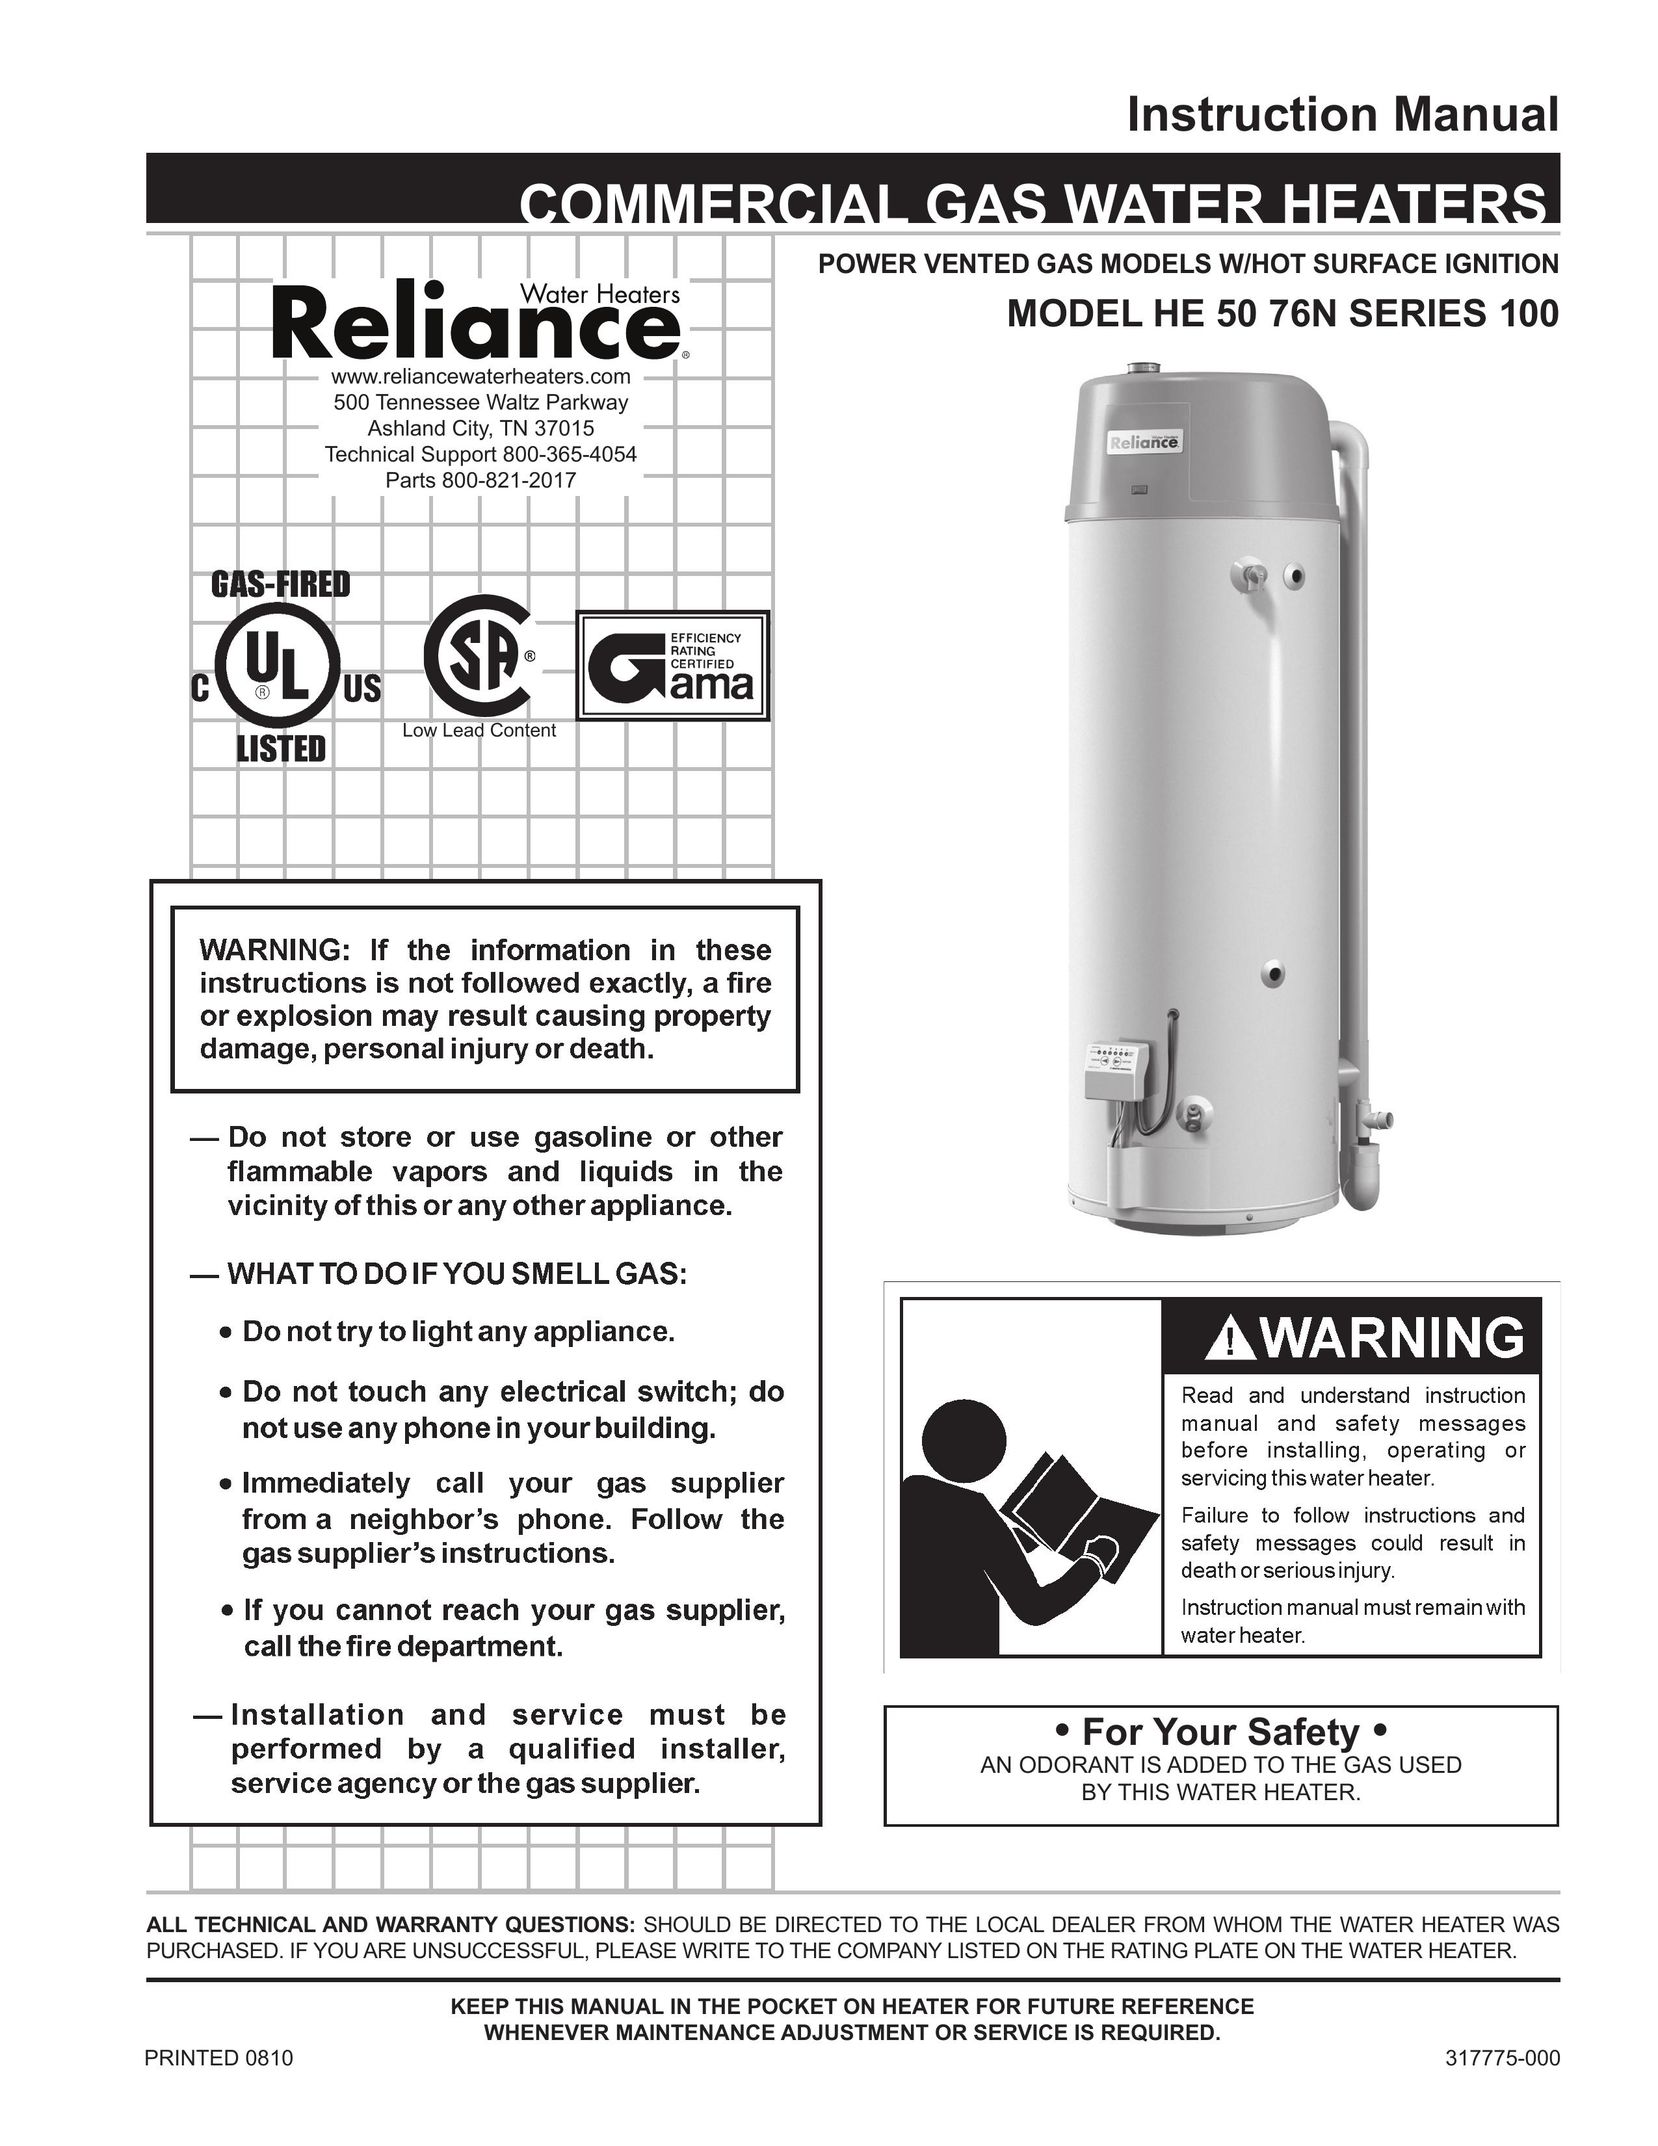 Reliance Water Heaters HE50 76N Series 100 Water Heater User Manual